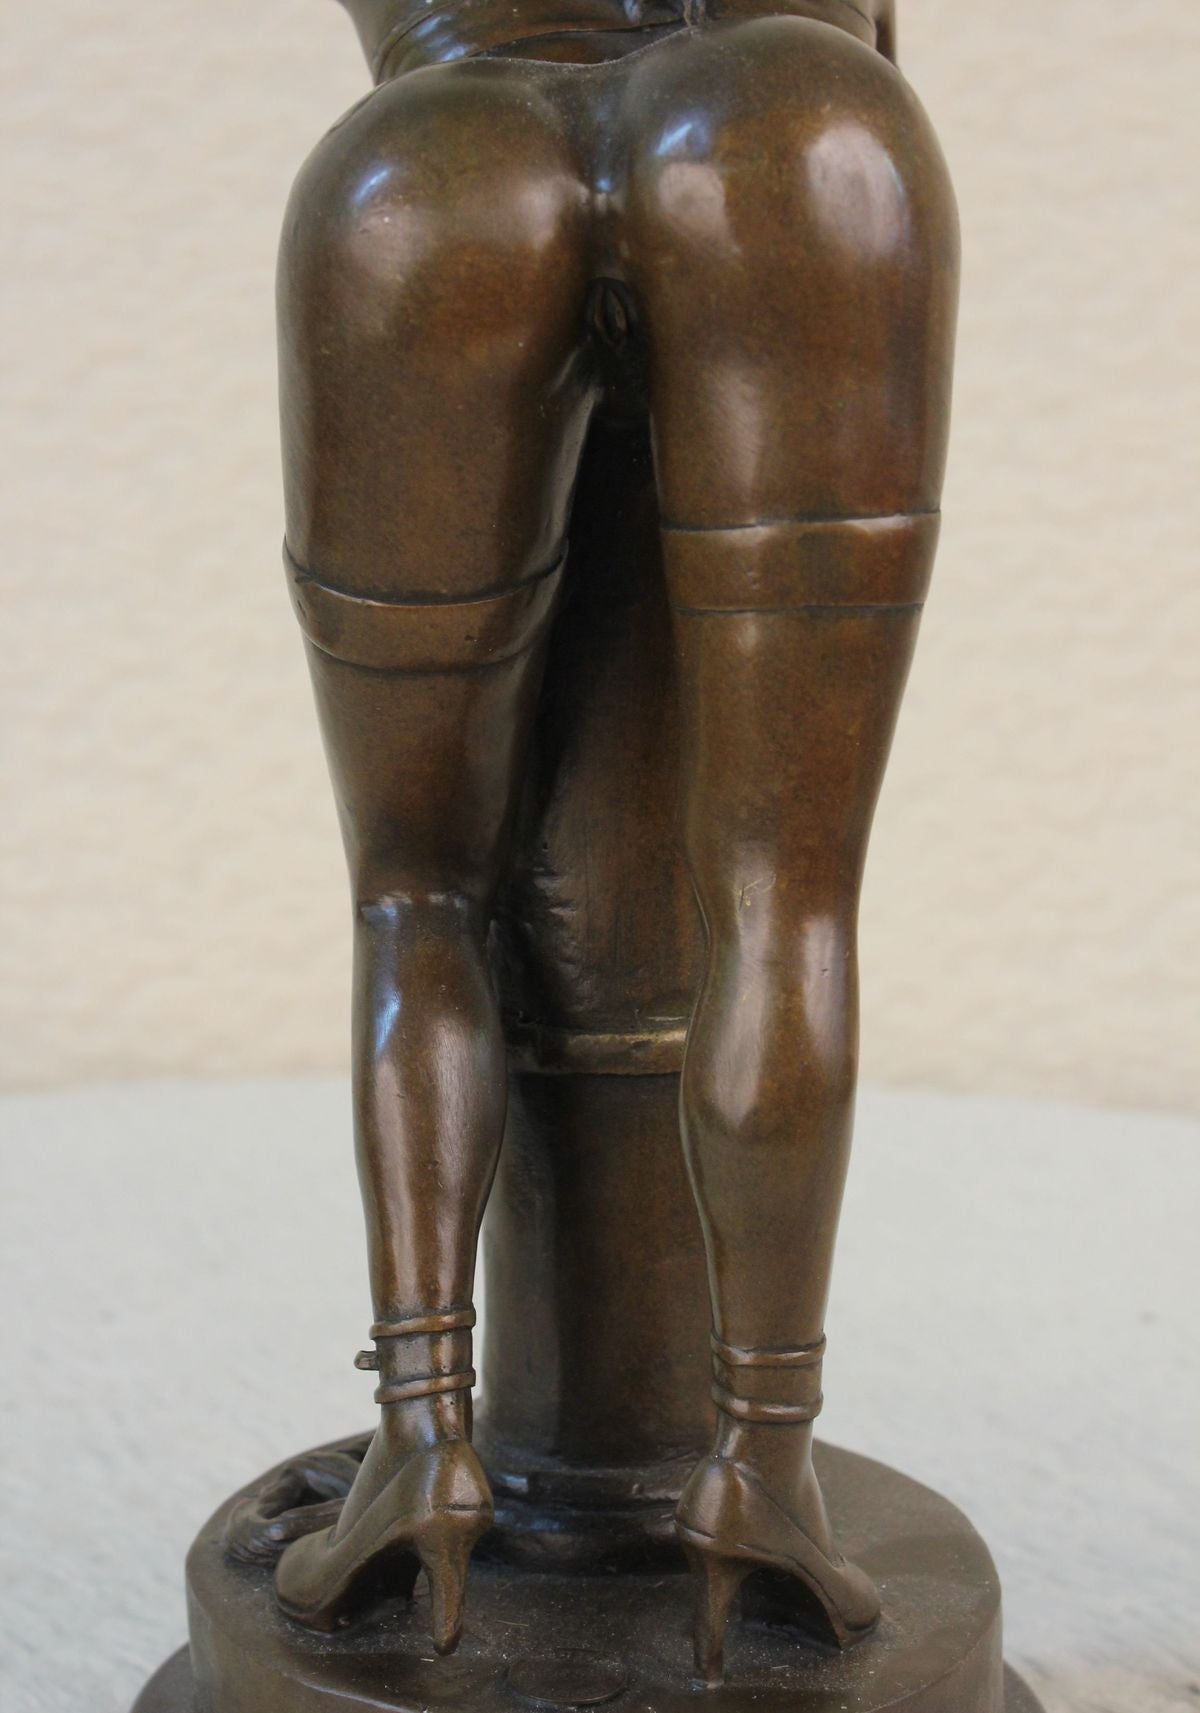 Handcrafted bronze sculpture SALE Base Marble On Bonze Female Erotic Nude